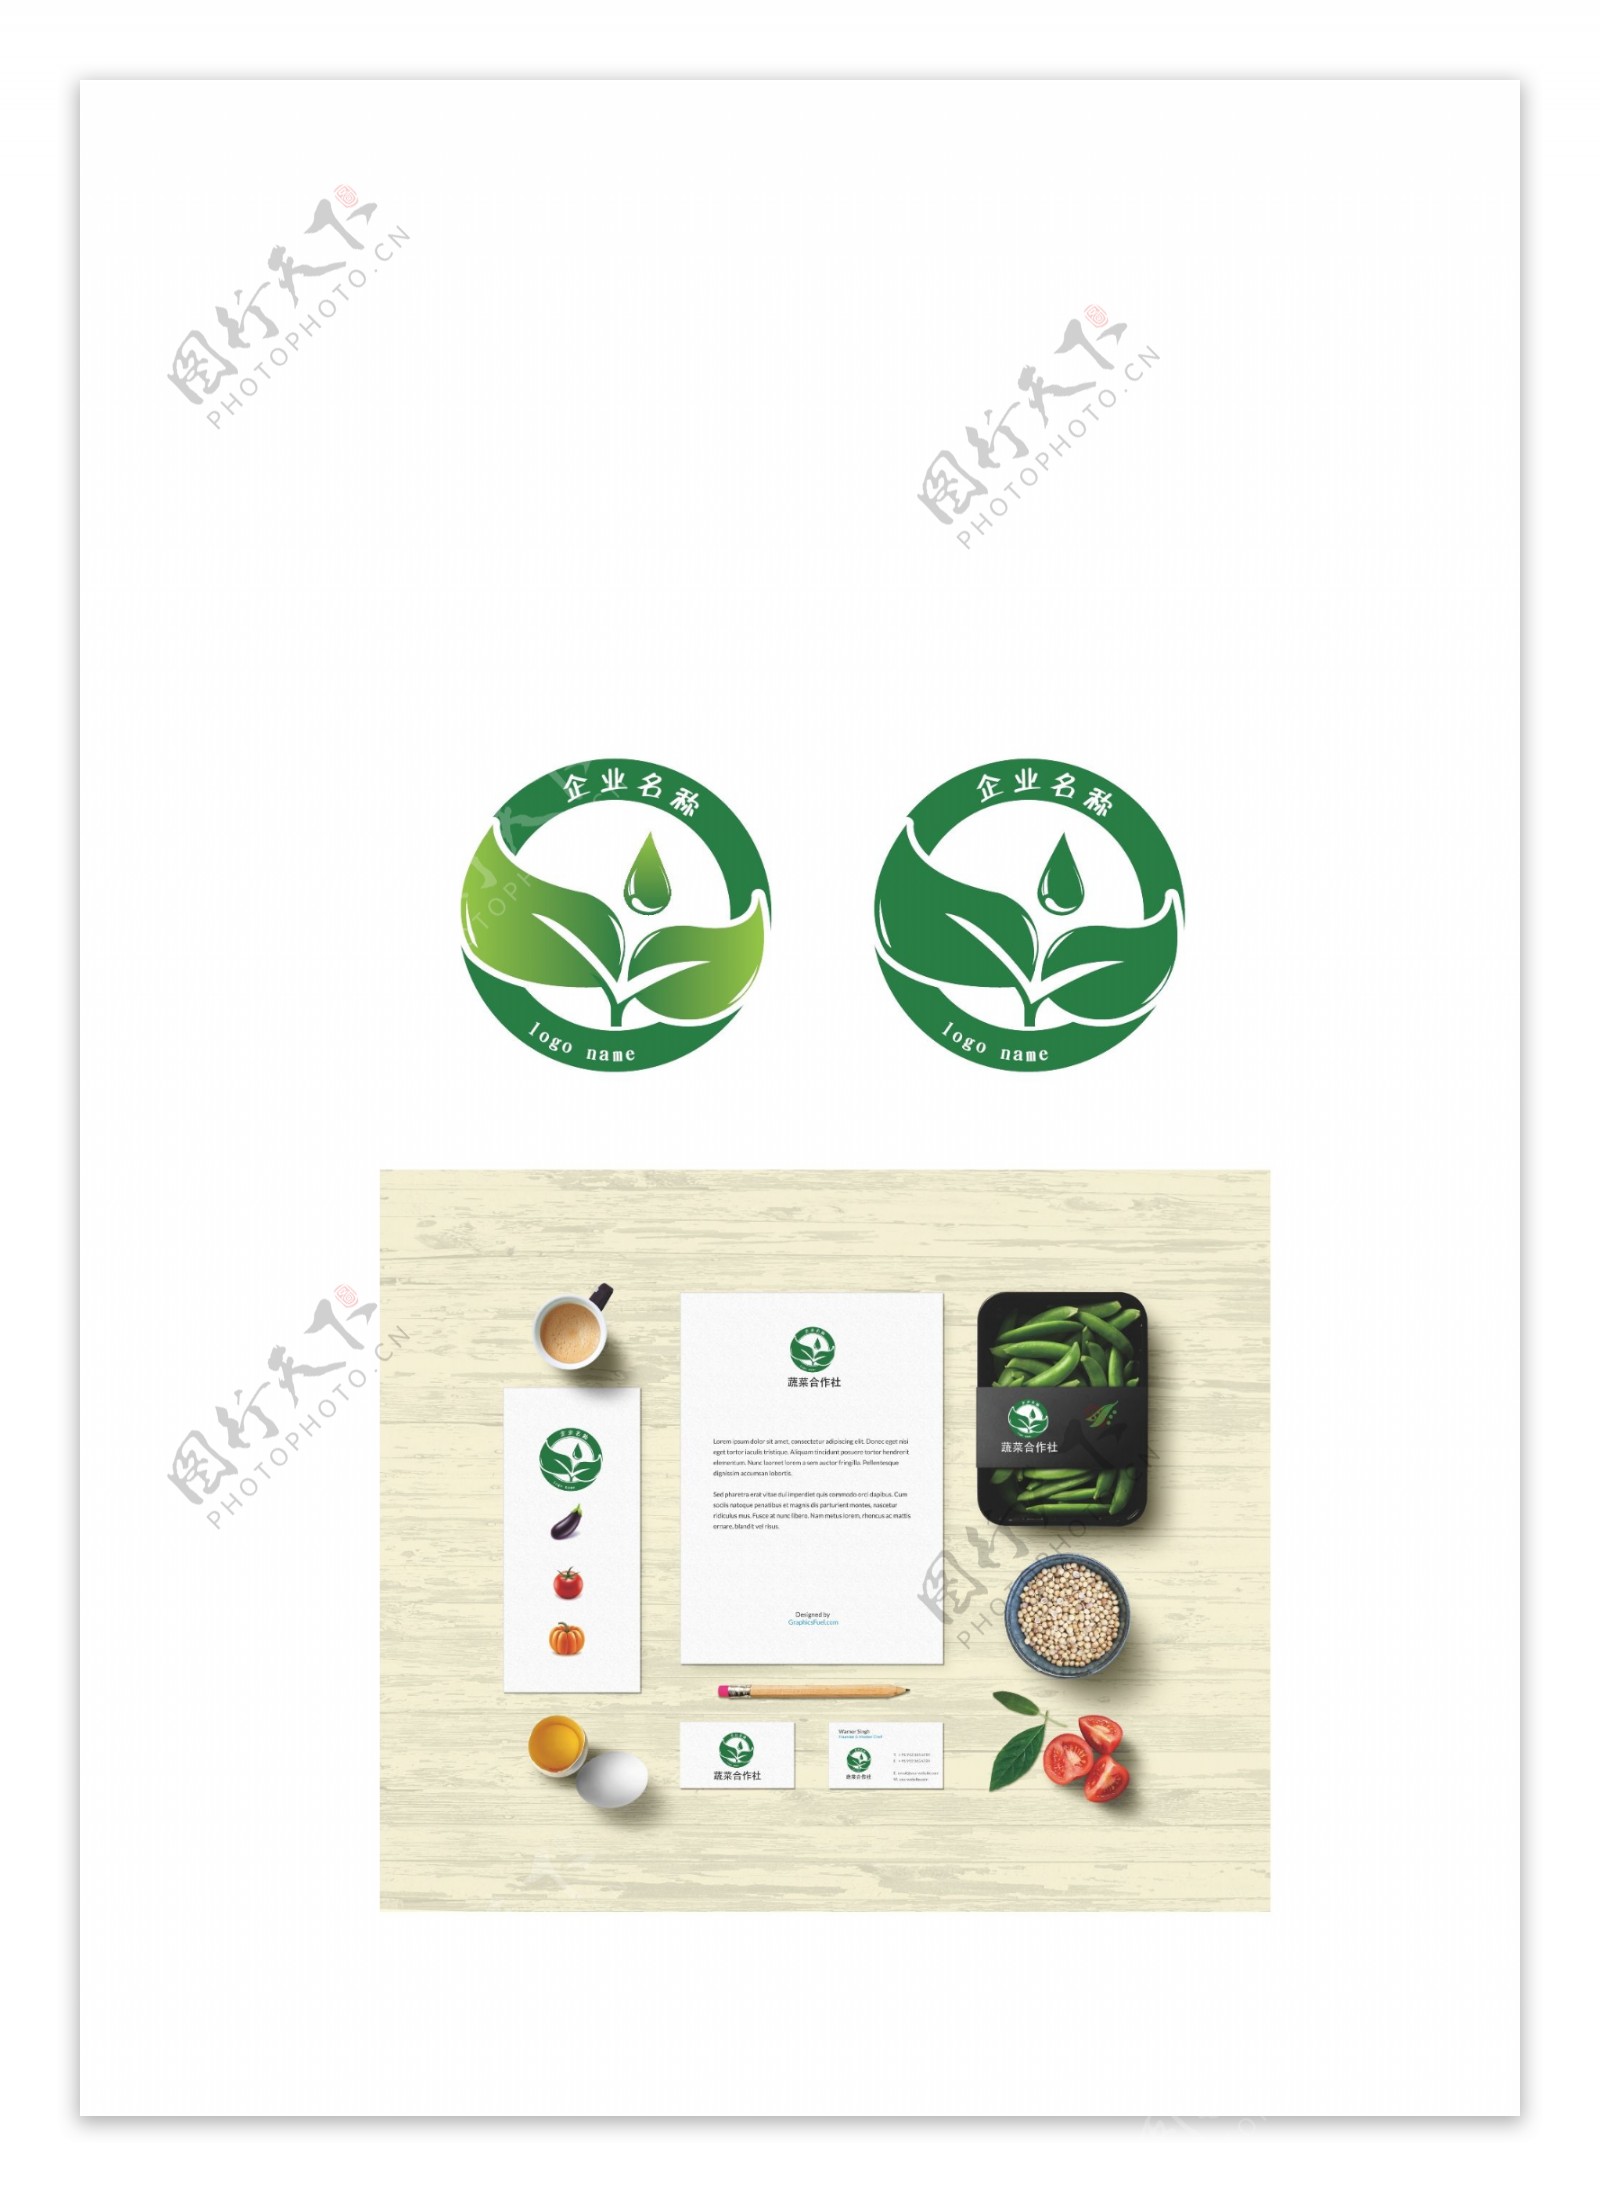 蔬菜合作社logo